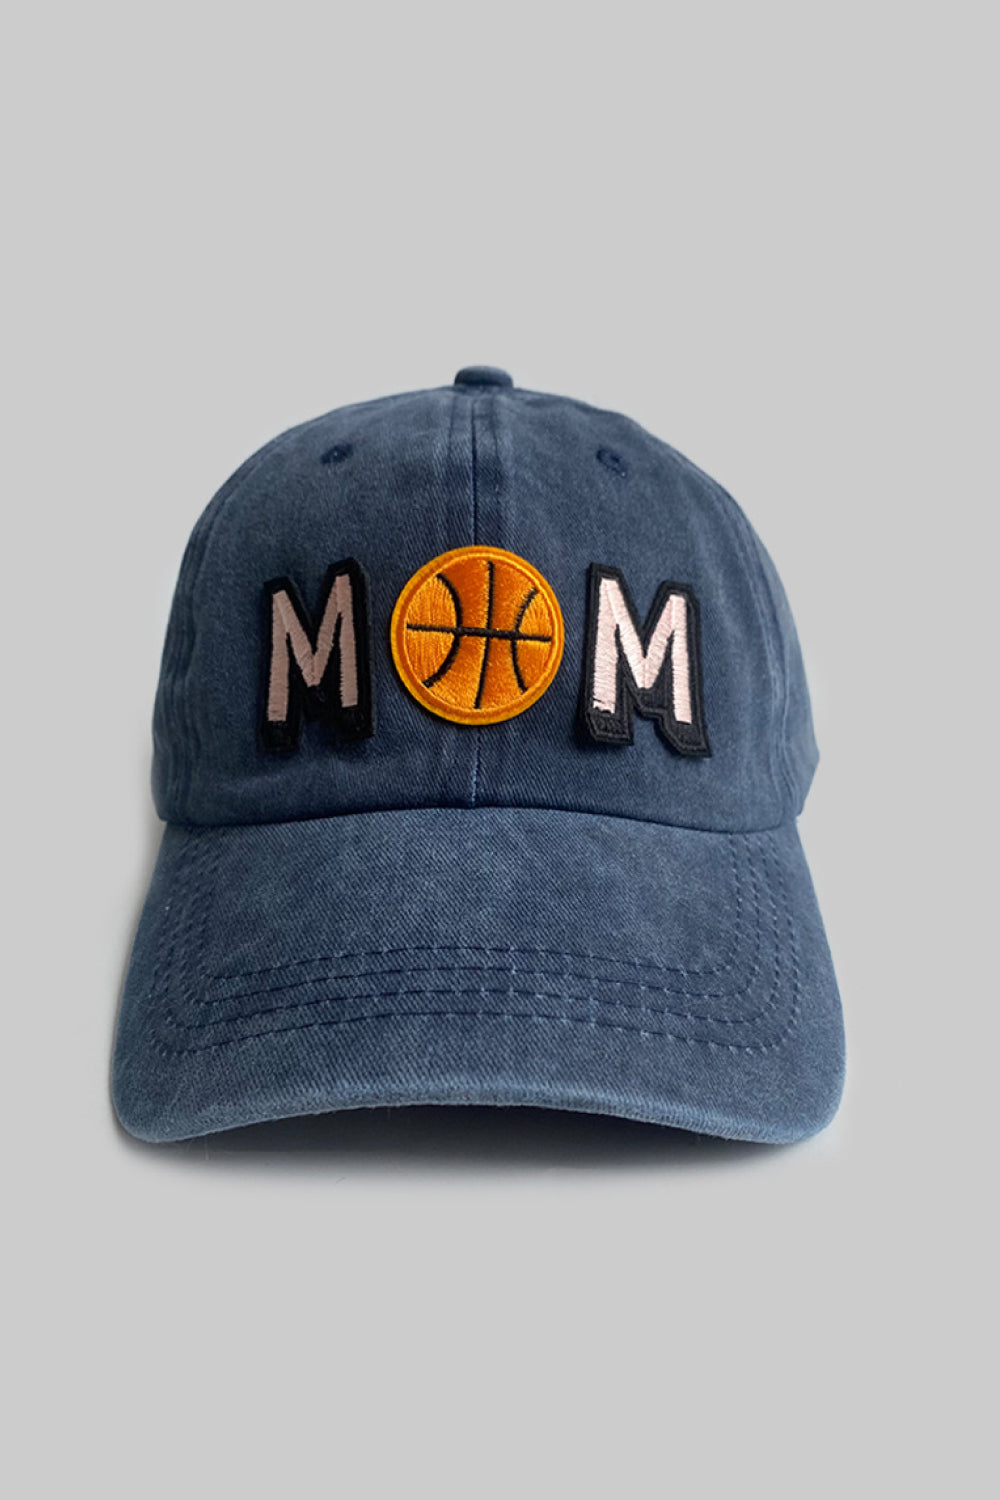 BASKETBALL MOM Distressed Baseball Style Cap Hat